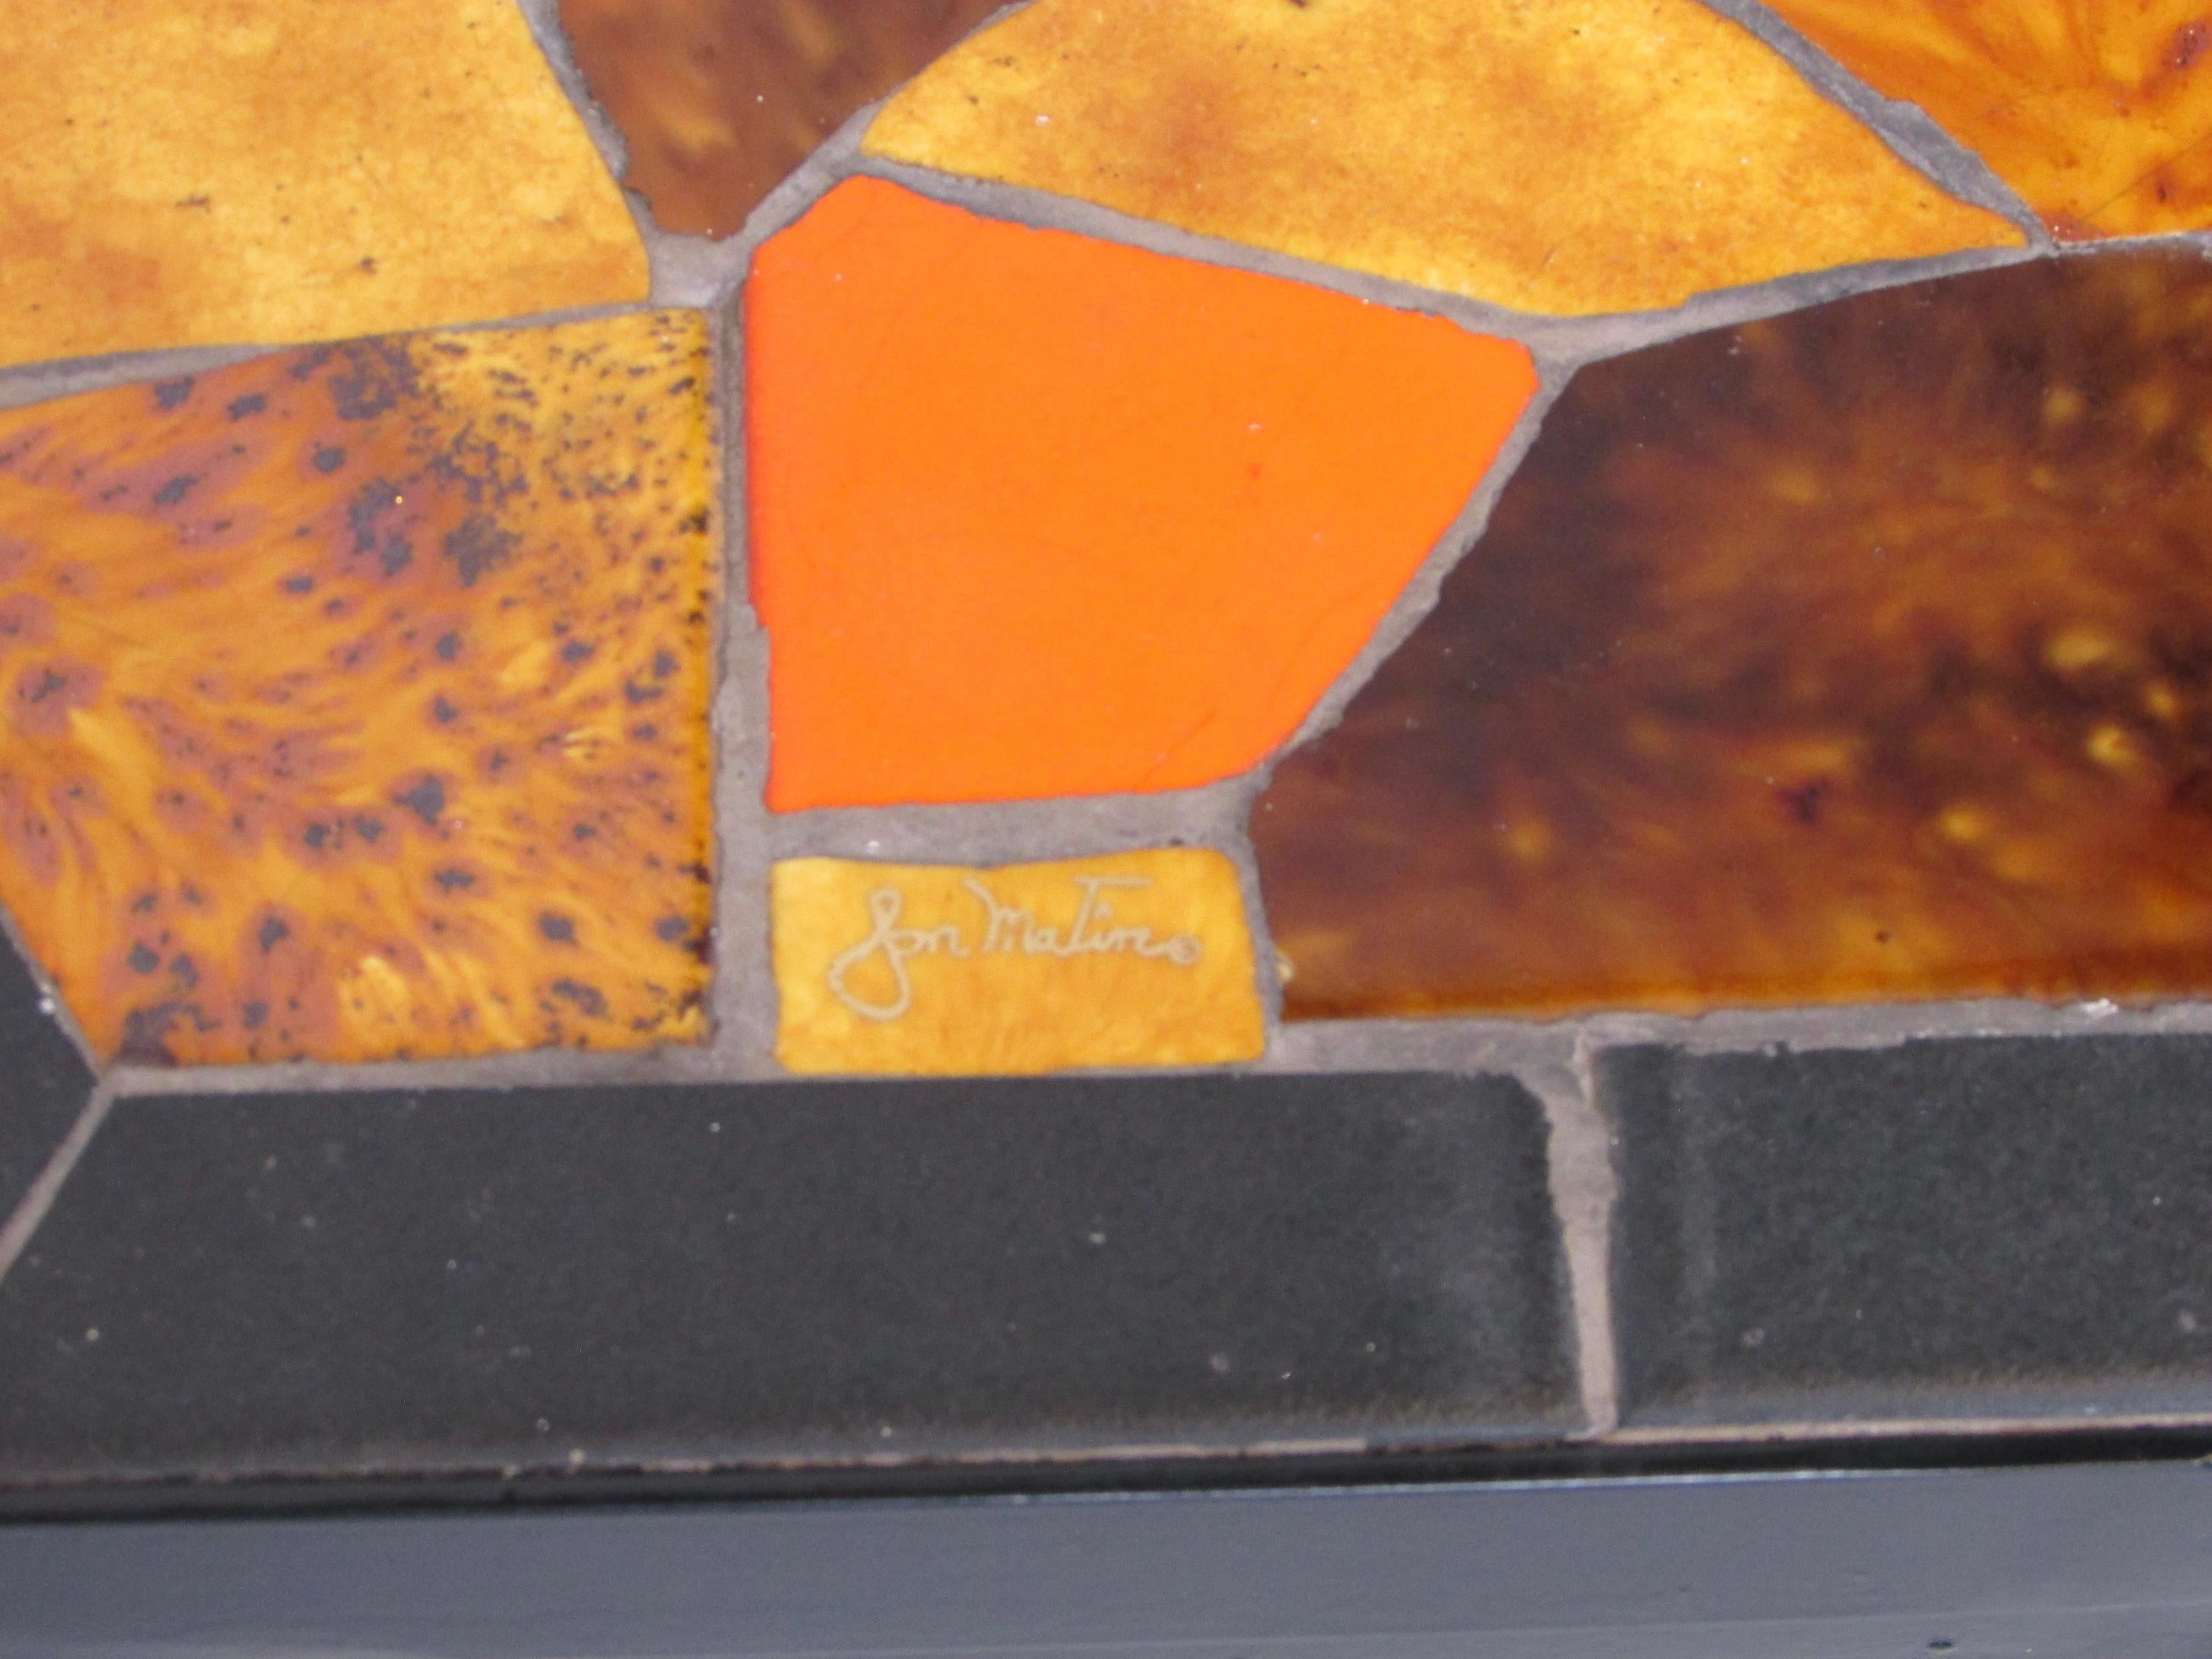 20th Century Jon Matin graduated Nest of Hexagonal Tile top Tables on Iron Base   For Sale